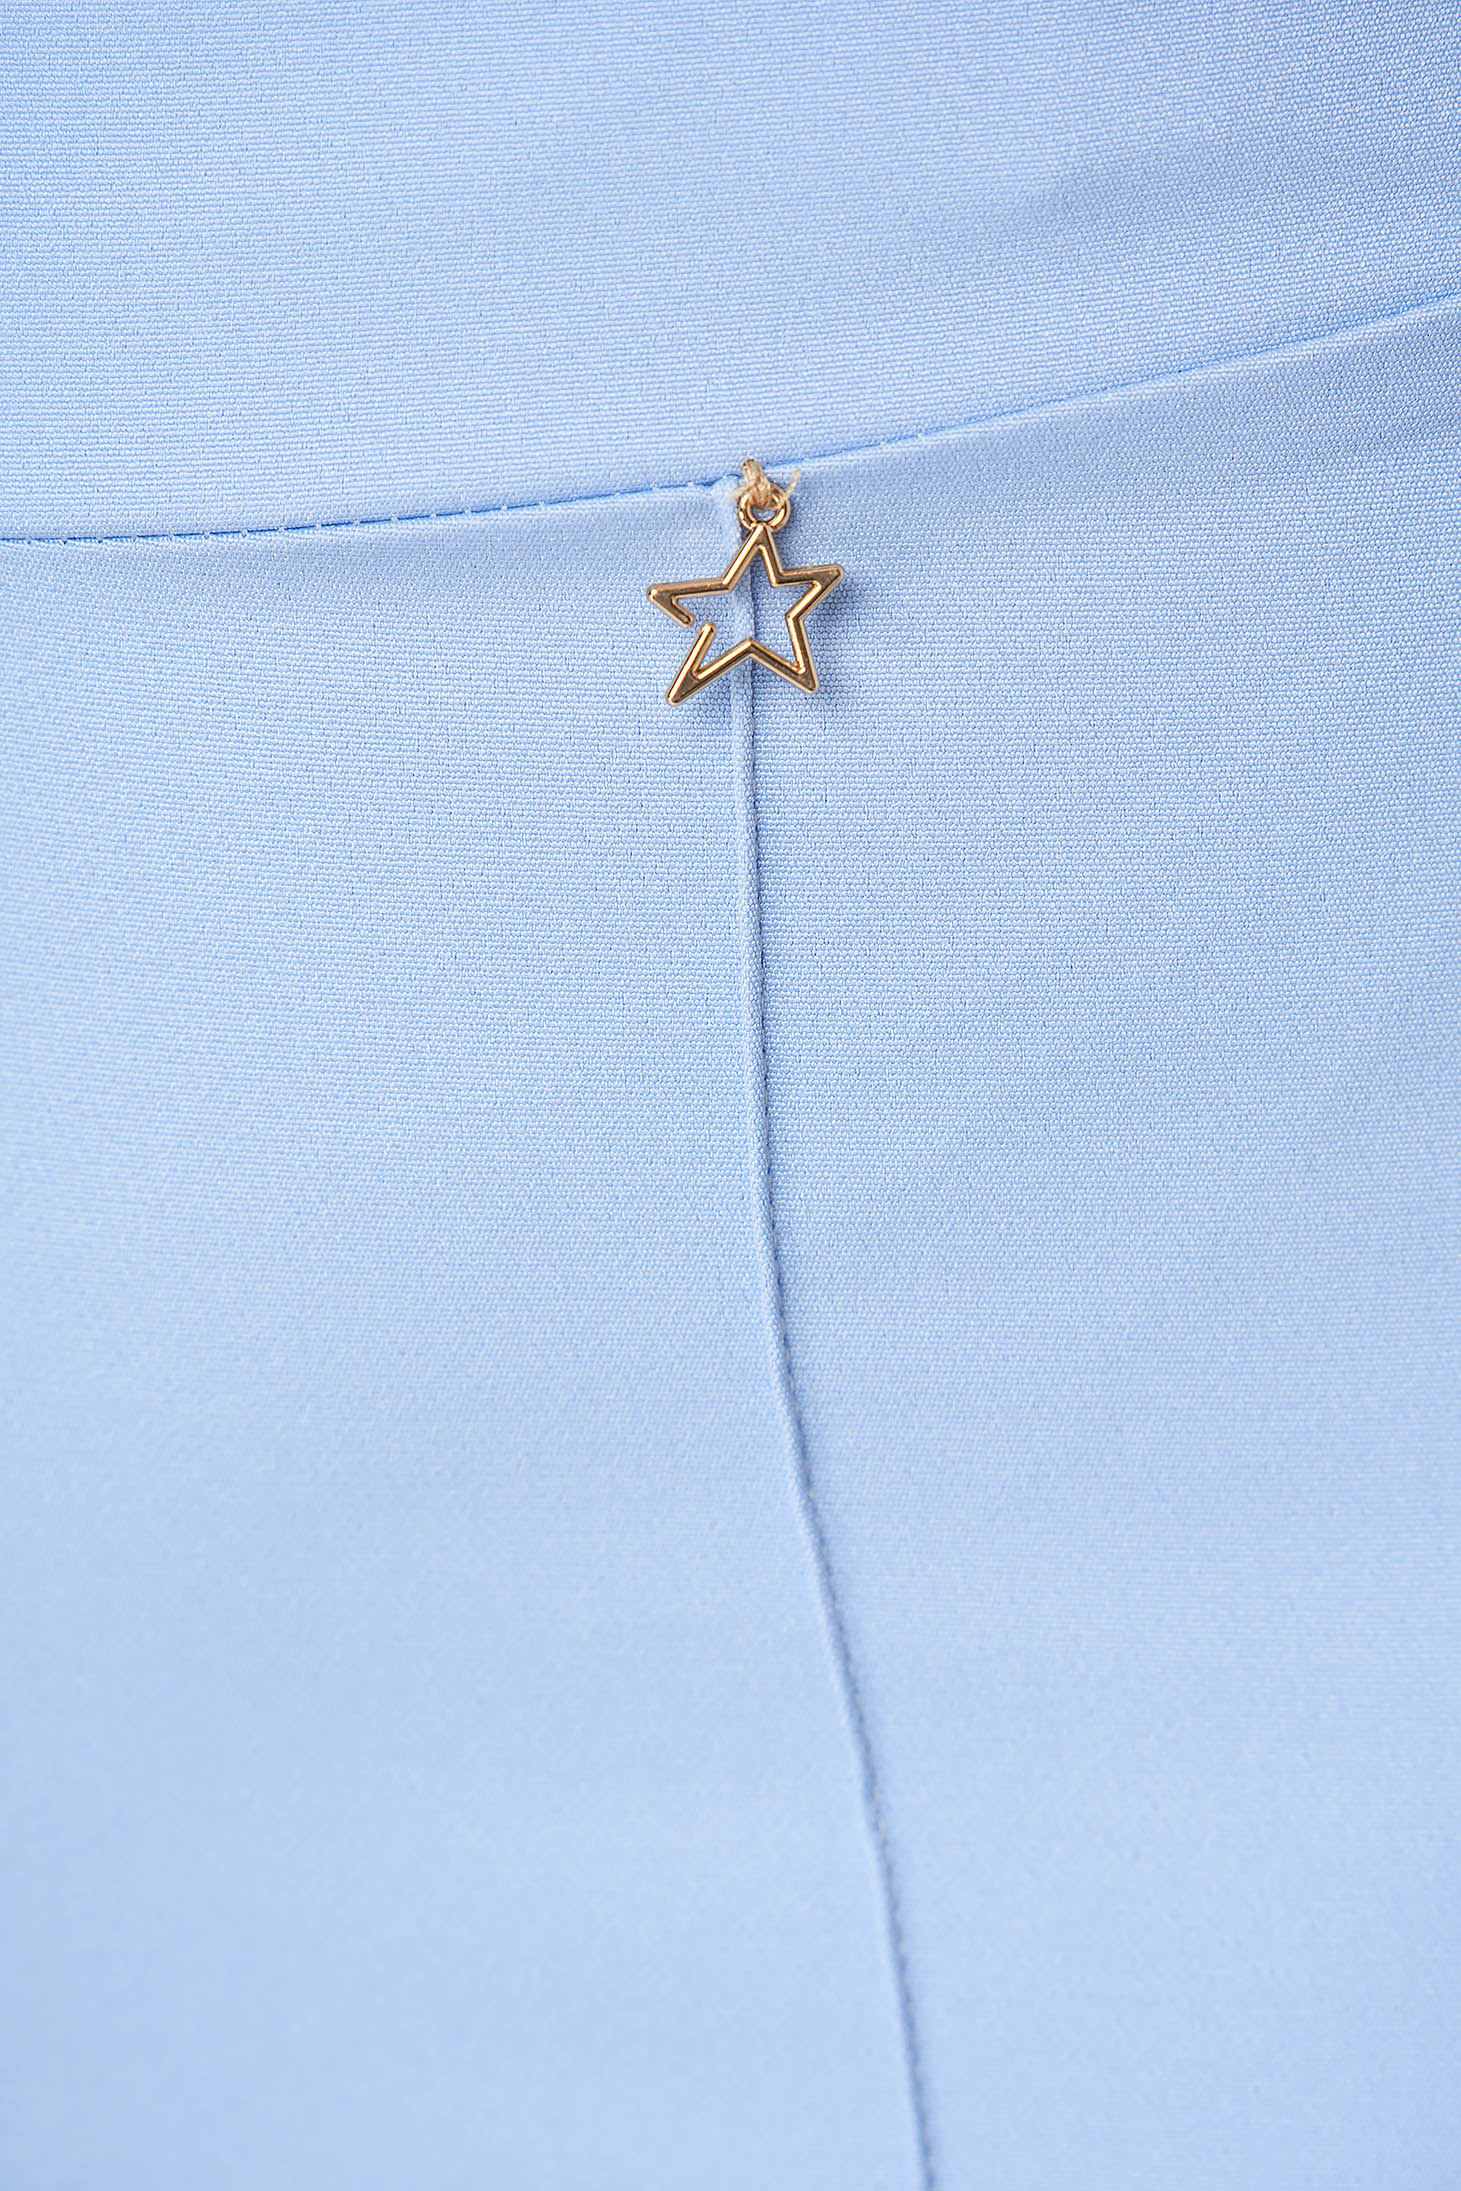 Világoskék hosszú magas derekú kónikus nadrág enyhén rugalmas szövetből - StarShinerS 6 - StarShinerS.hu